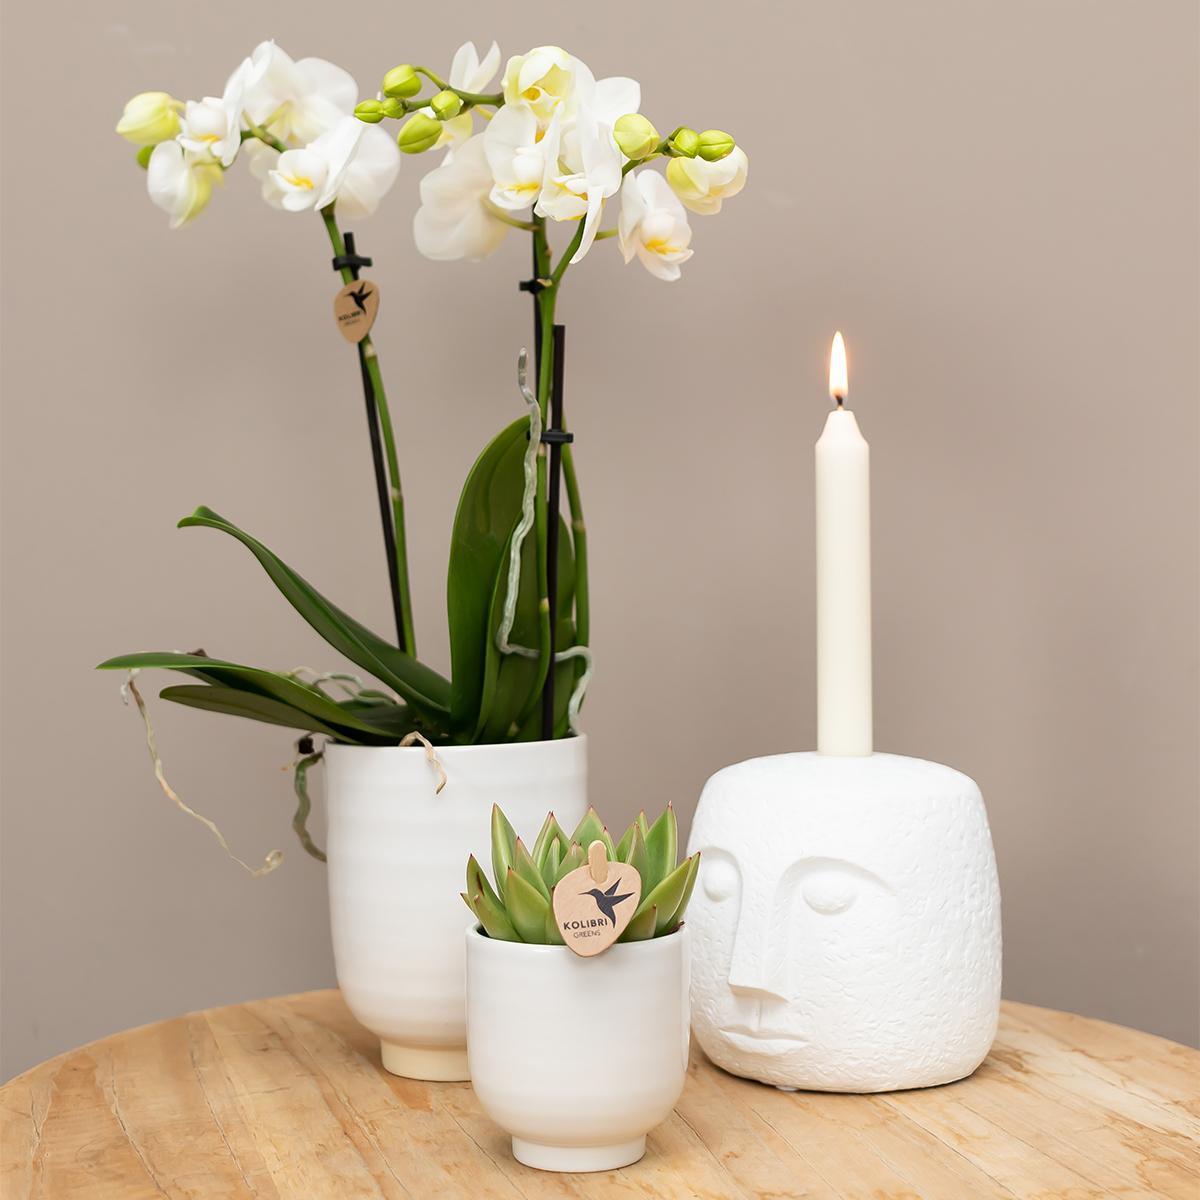 Kolibri Home | Glazed bloempot - Witte keramieken sierpot met glans - potmaat Ø6cm